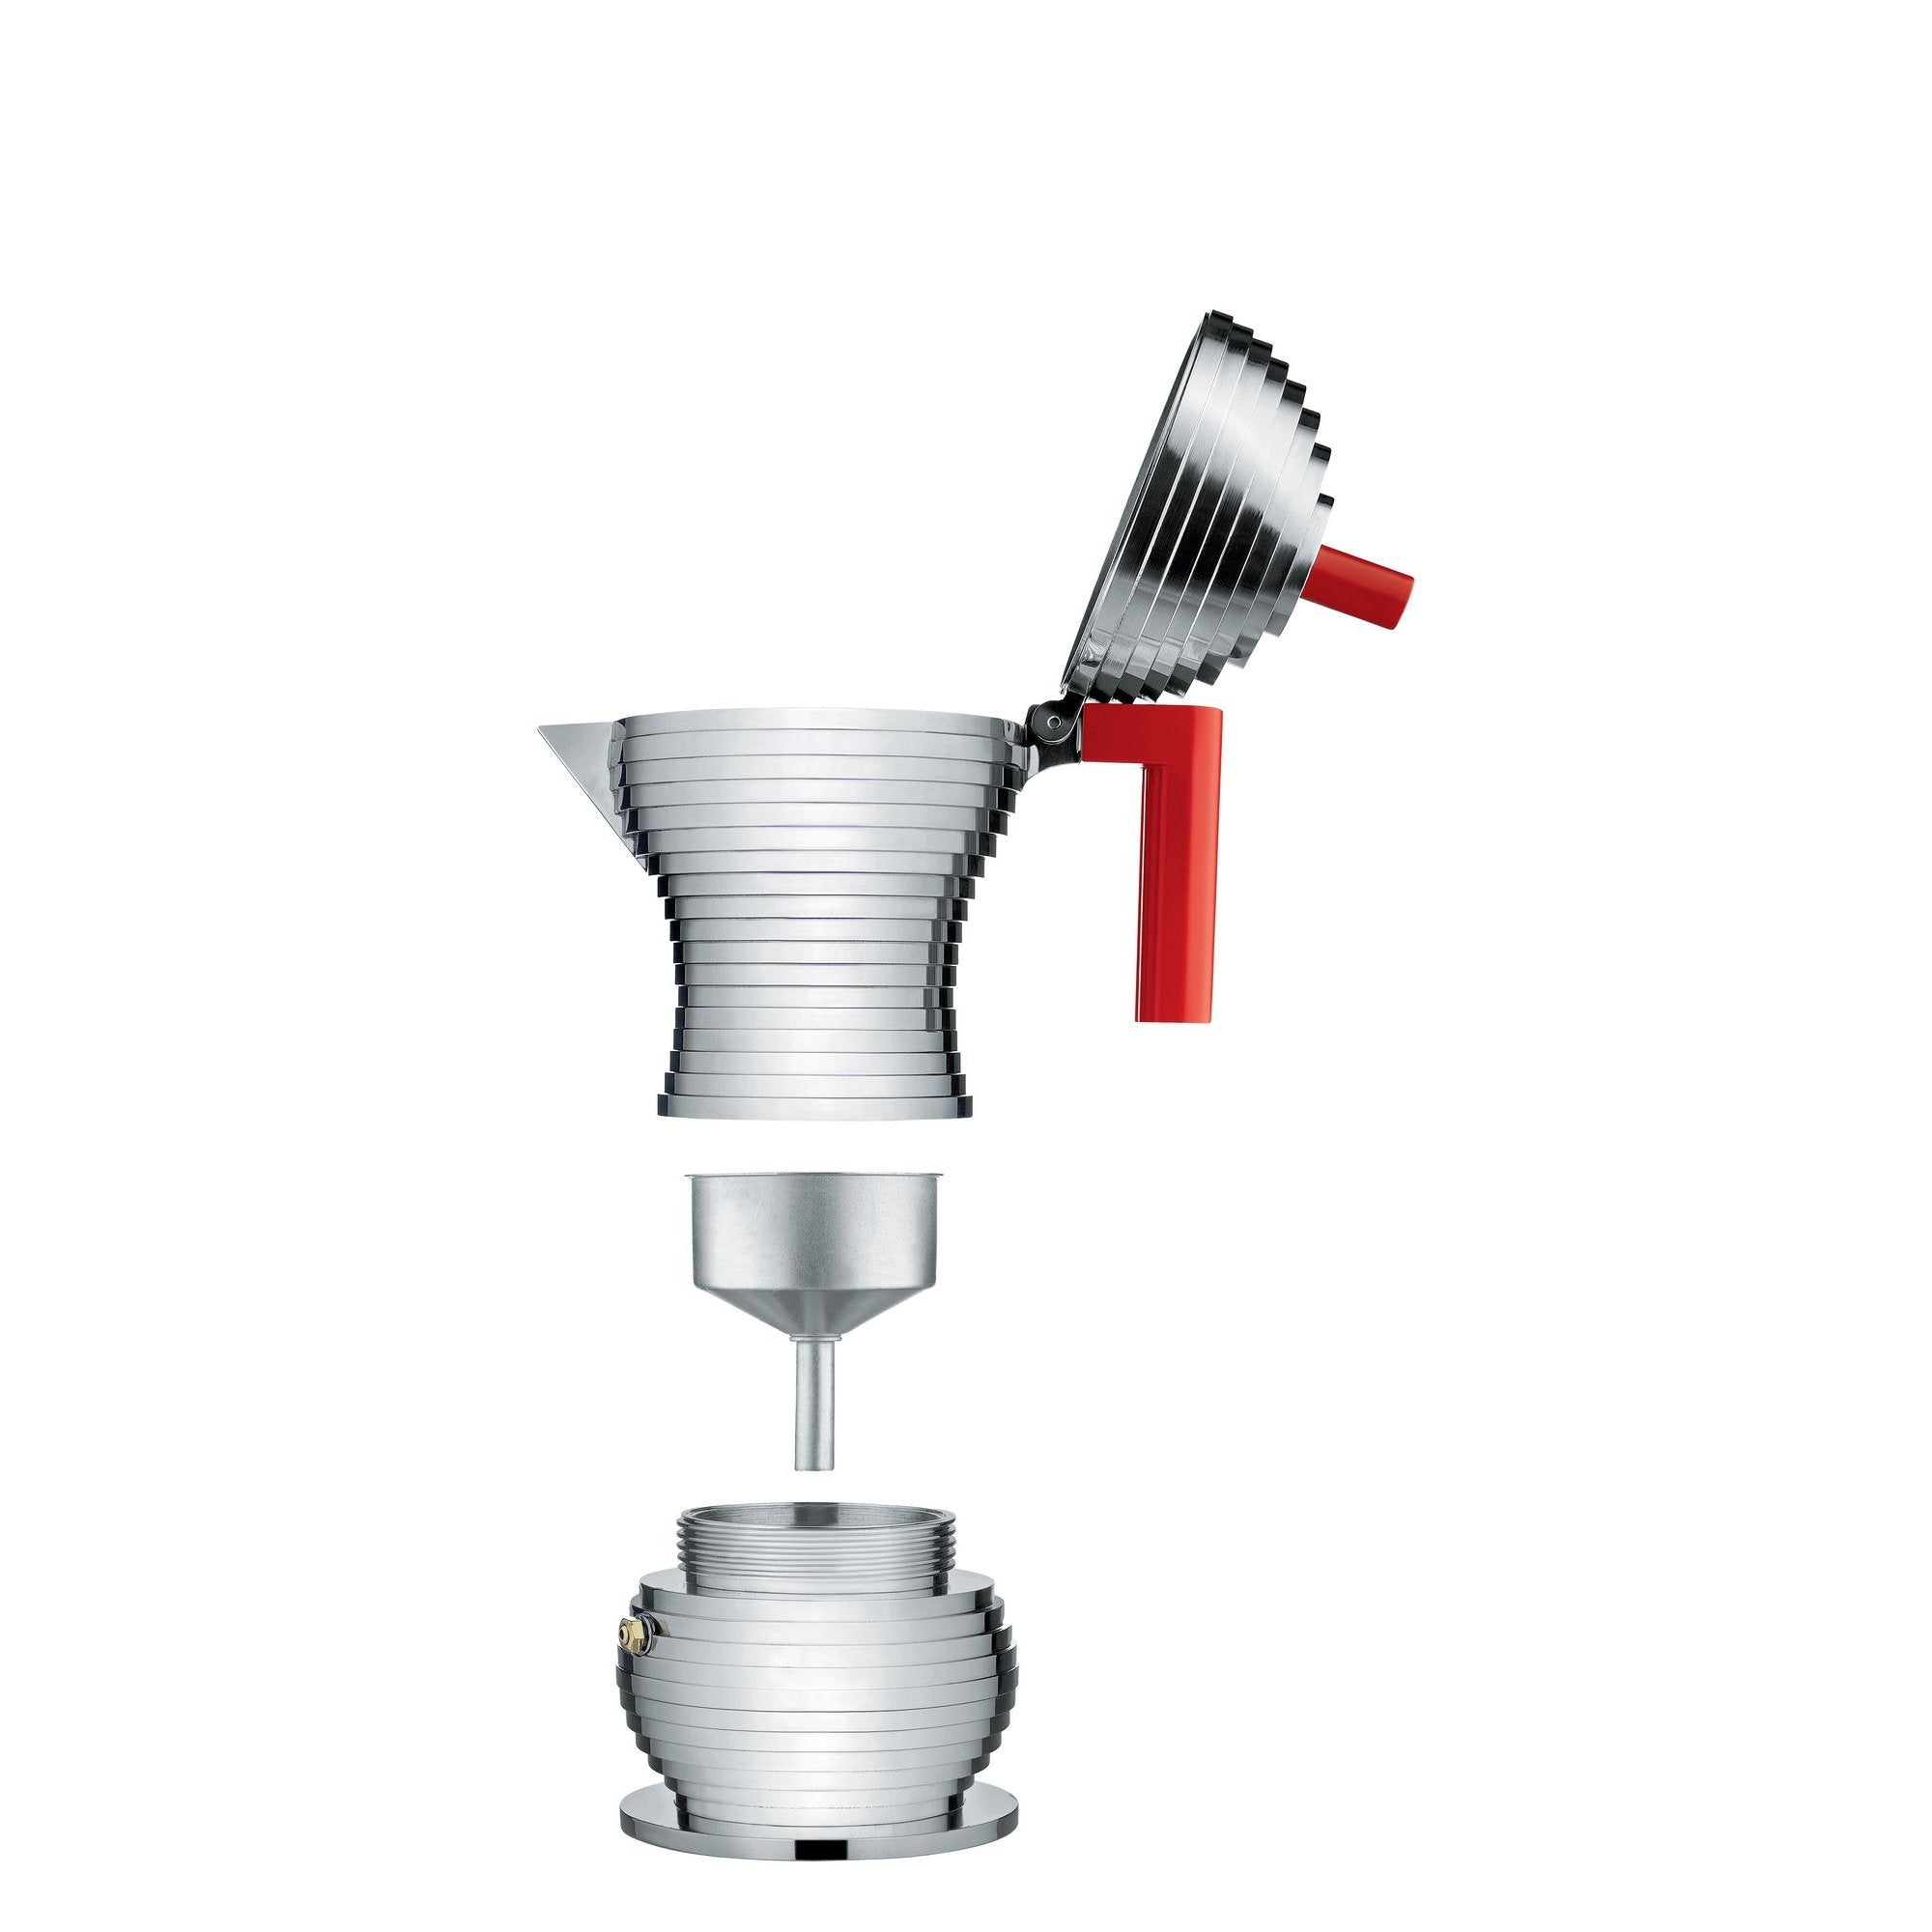 MDL02/6RFM - Pulcina Espresso coffee maker 6 cup red induction